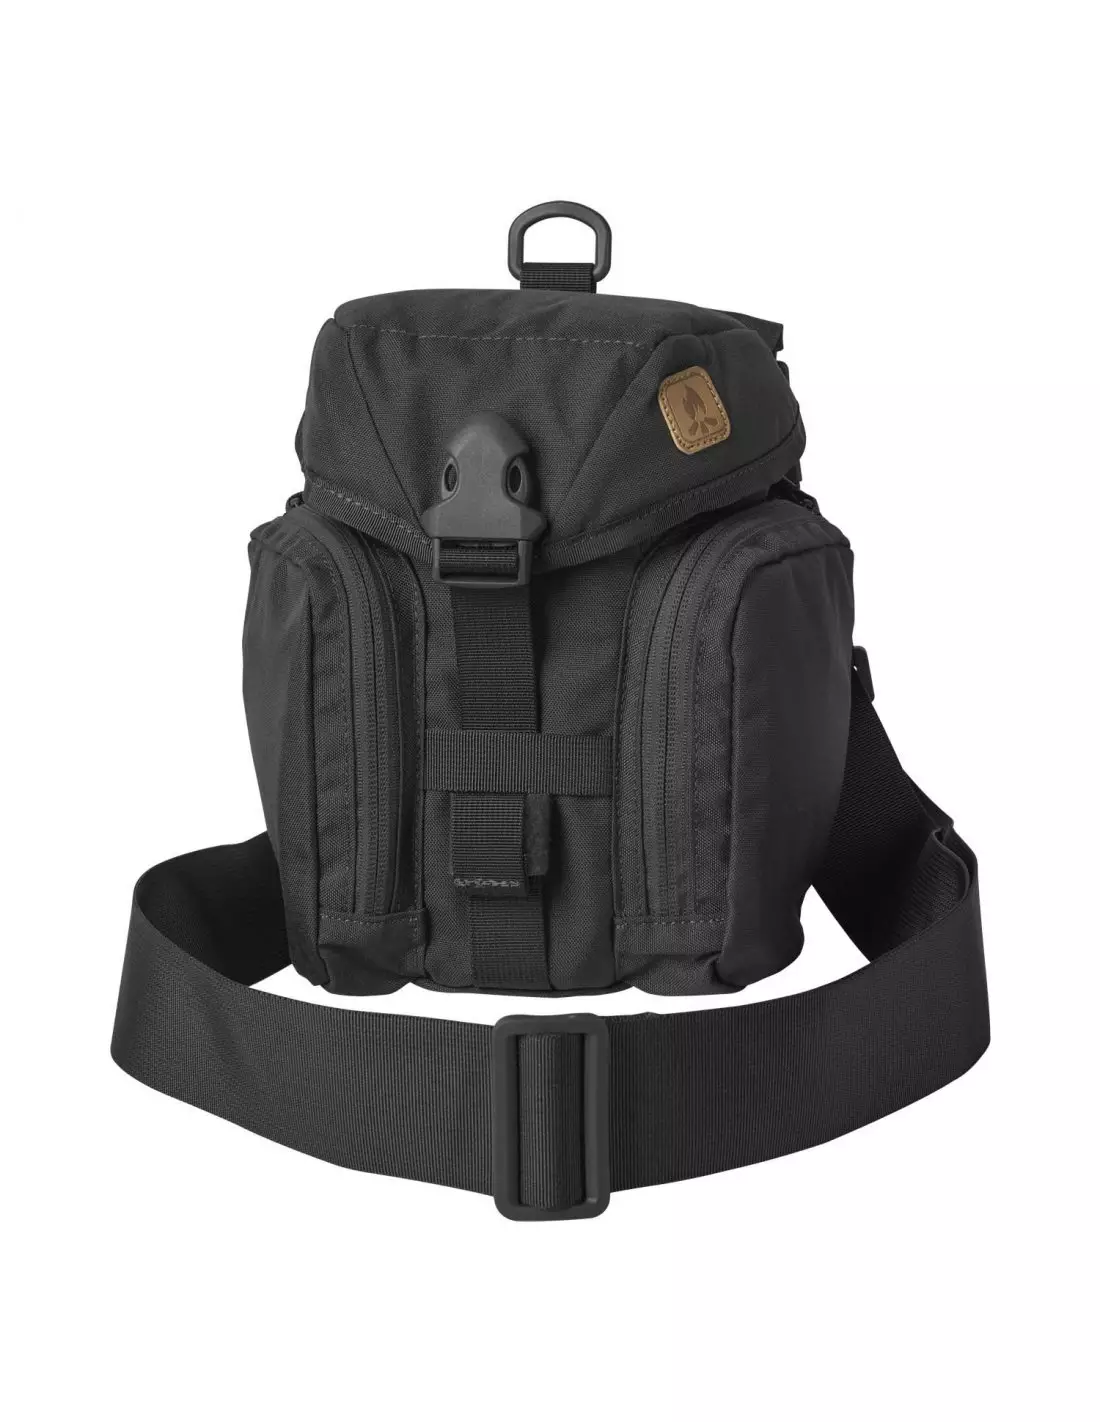 Helikon-Tex FOXHOLE Bag Pouch Backpack Hiking Cordura Rucksack Molle  Tactical